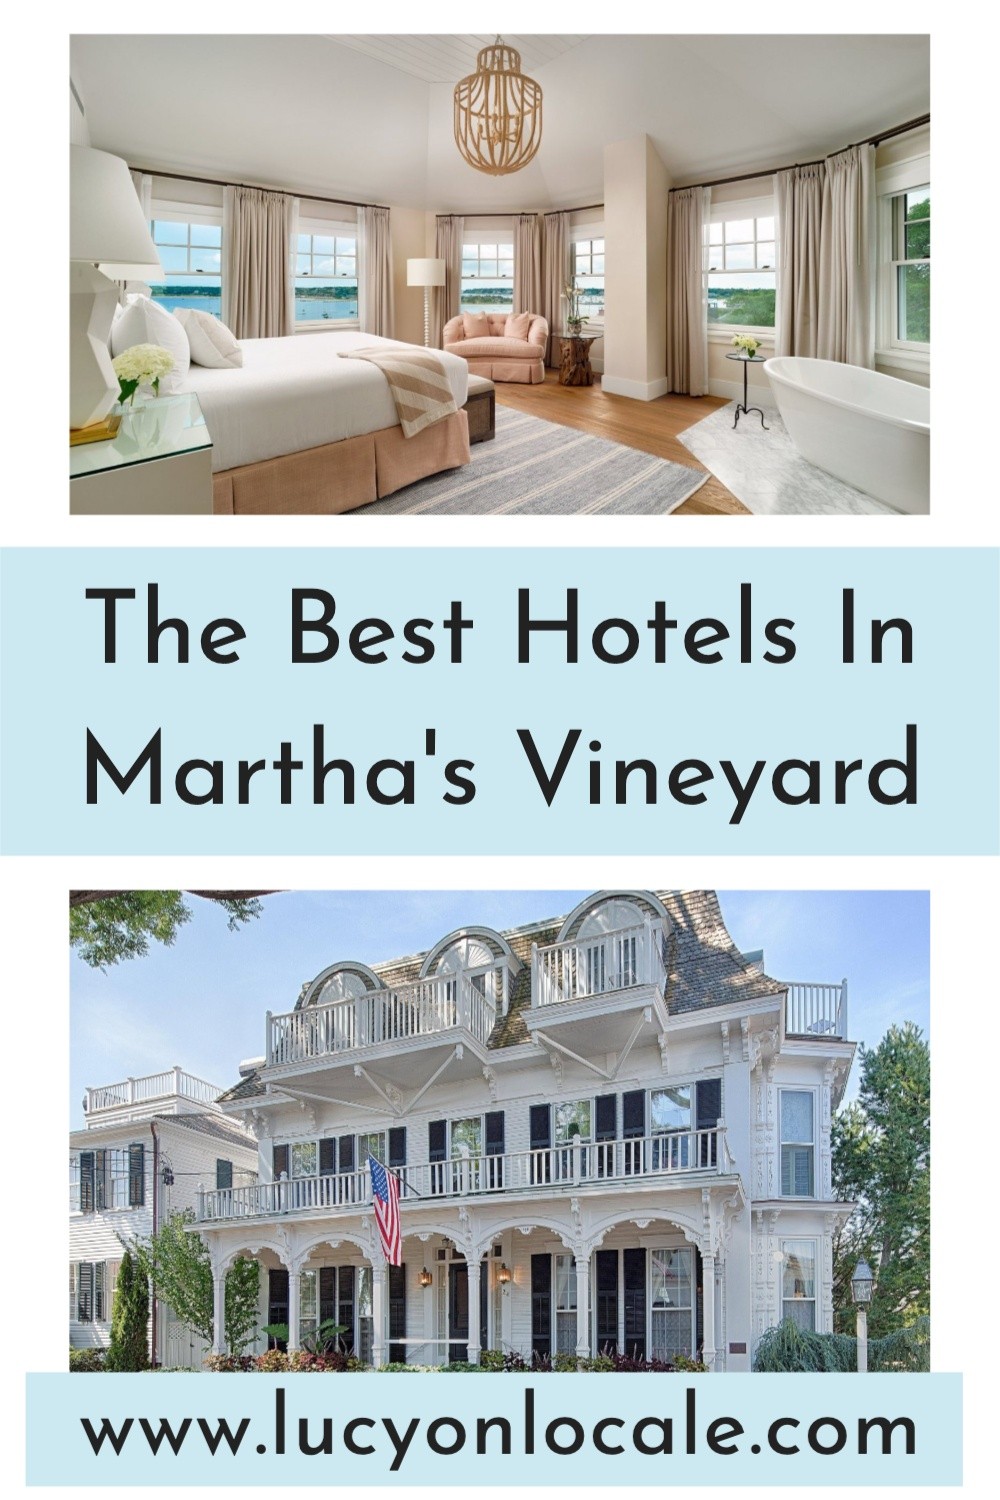 The best hotels in Martha's Vineyard